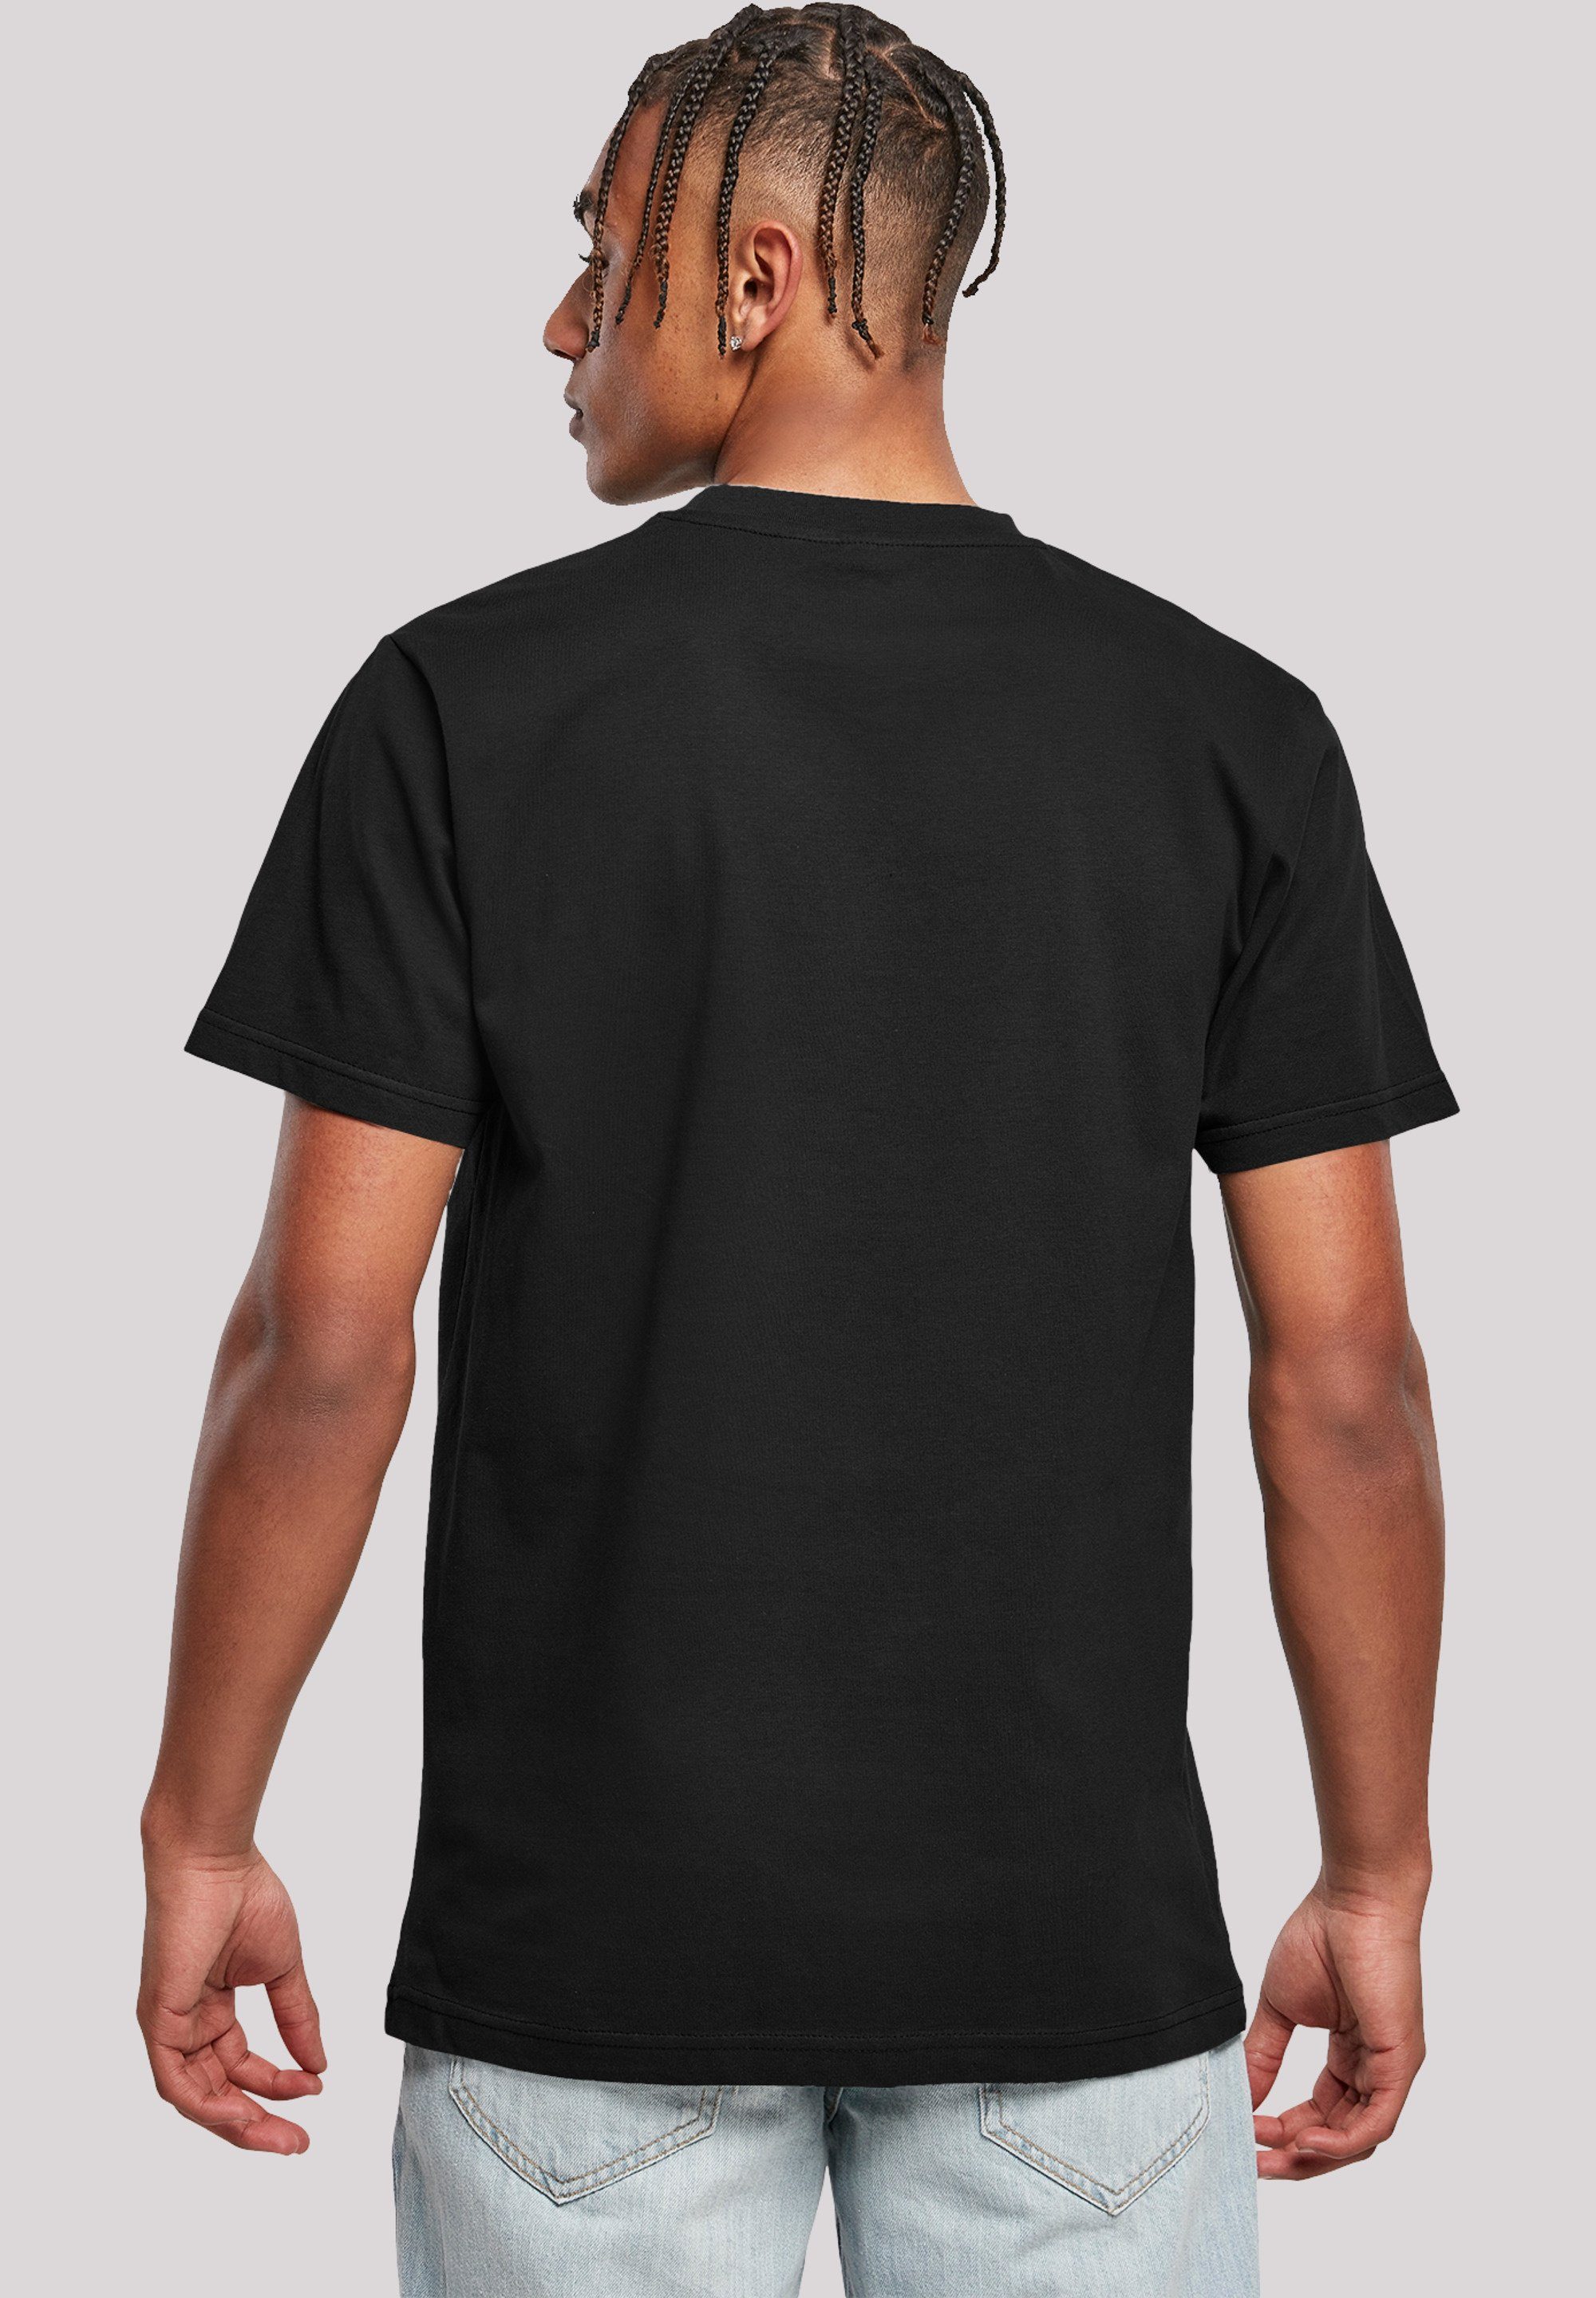 F4NT4STIC T-Shirt Herren,Premium Merch,Regular-Fit,Basic,Bedruckt Earth Planet NASA